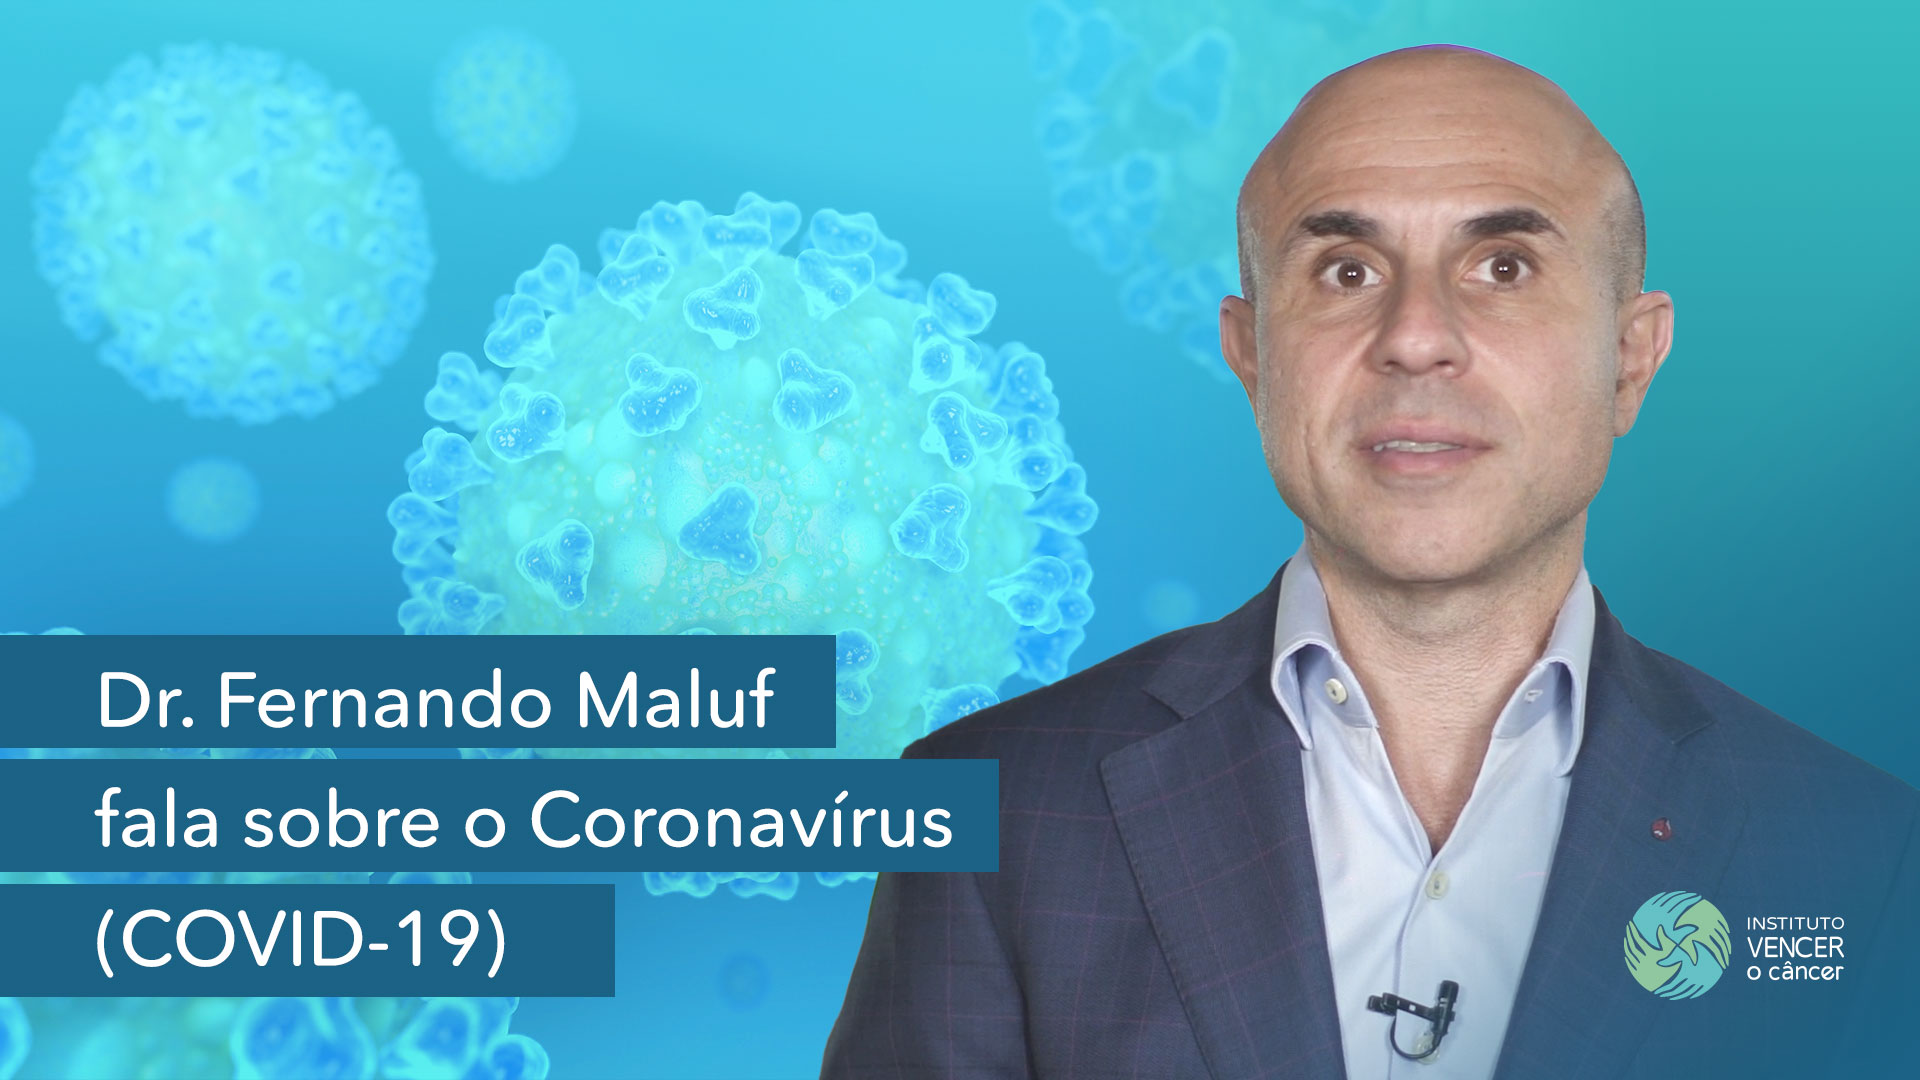 Dr. Fernando Maluf fala sobre o Coronavírus (COVID-19)